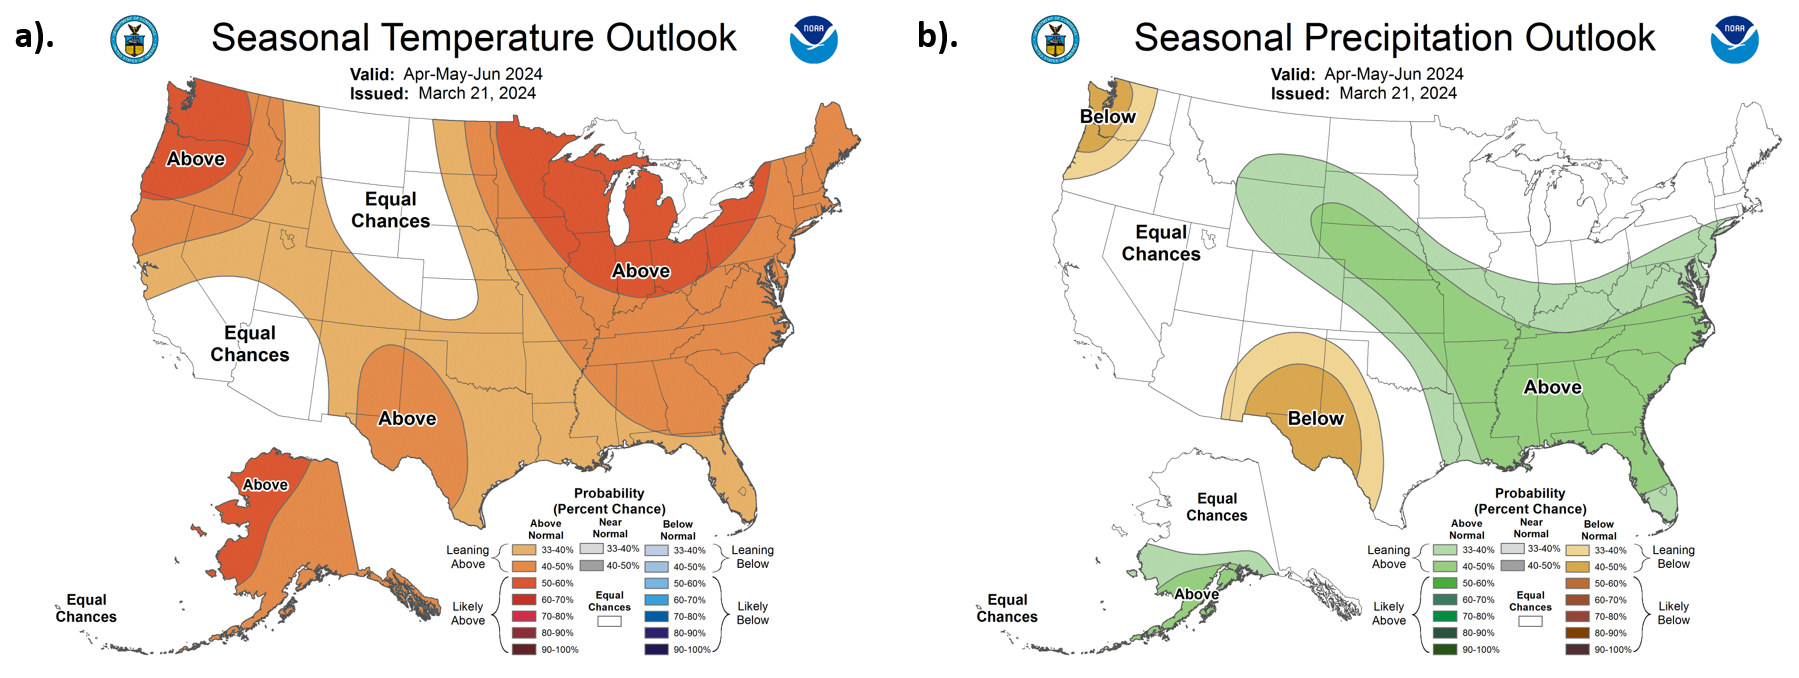 United States Seasonal Temperature Outlook and Seasonal Precipitation Outlook for April through June 2024.